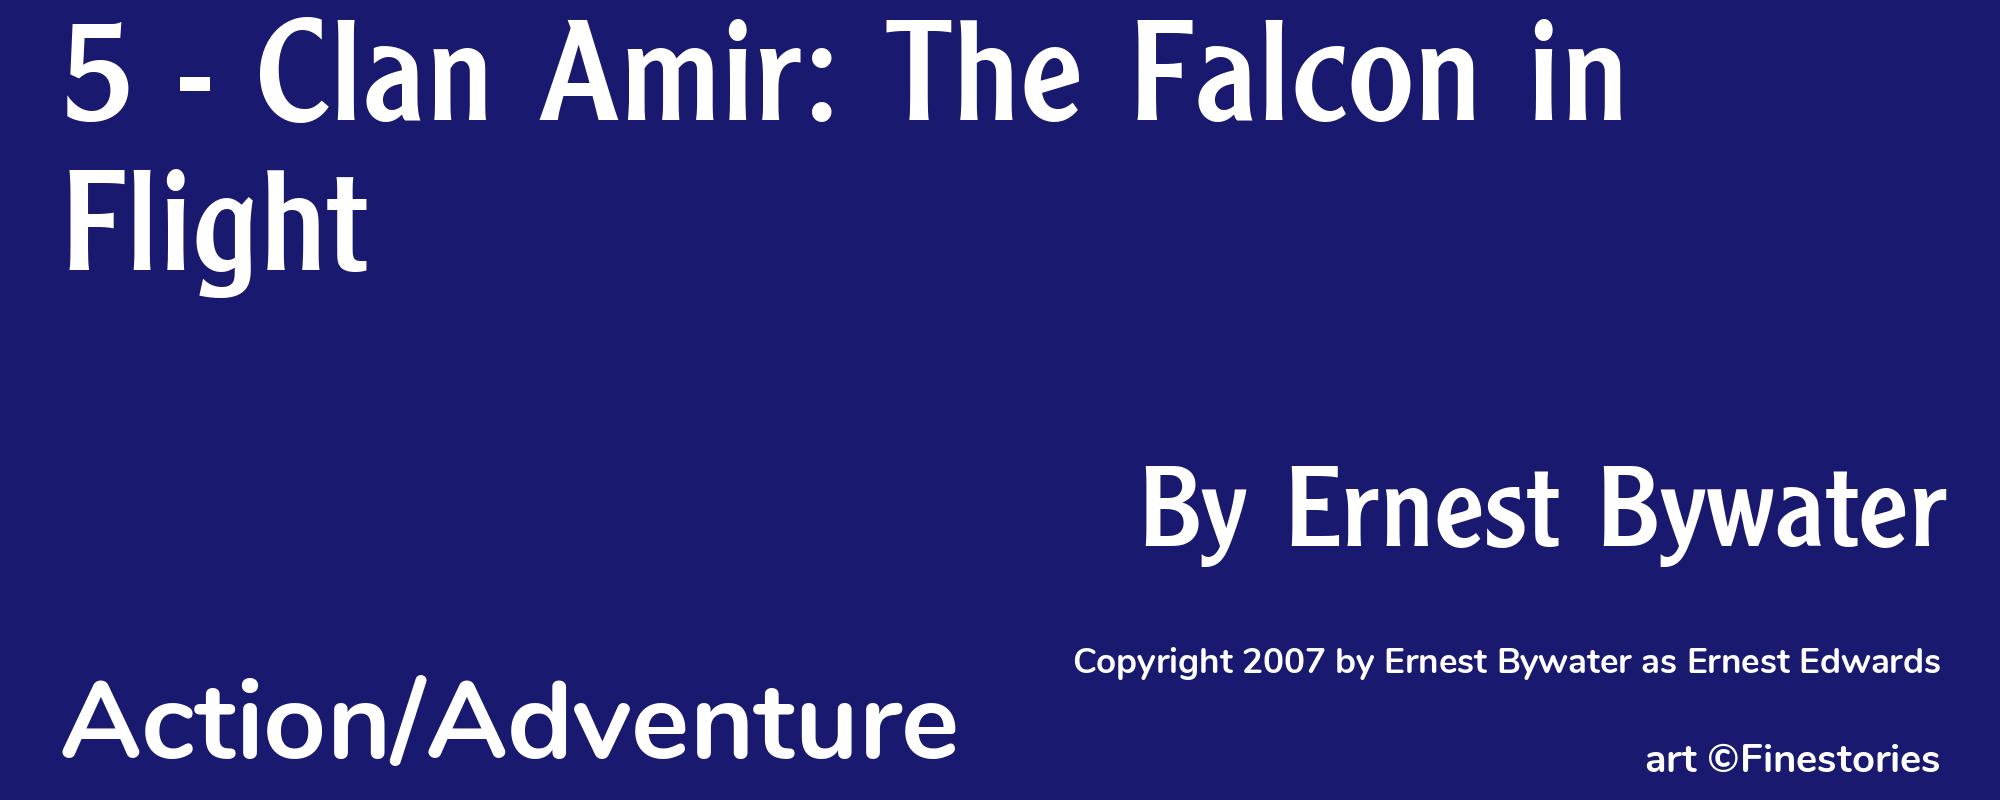 5 - Clan Amir: The Falcon in Flight - Cover